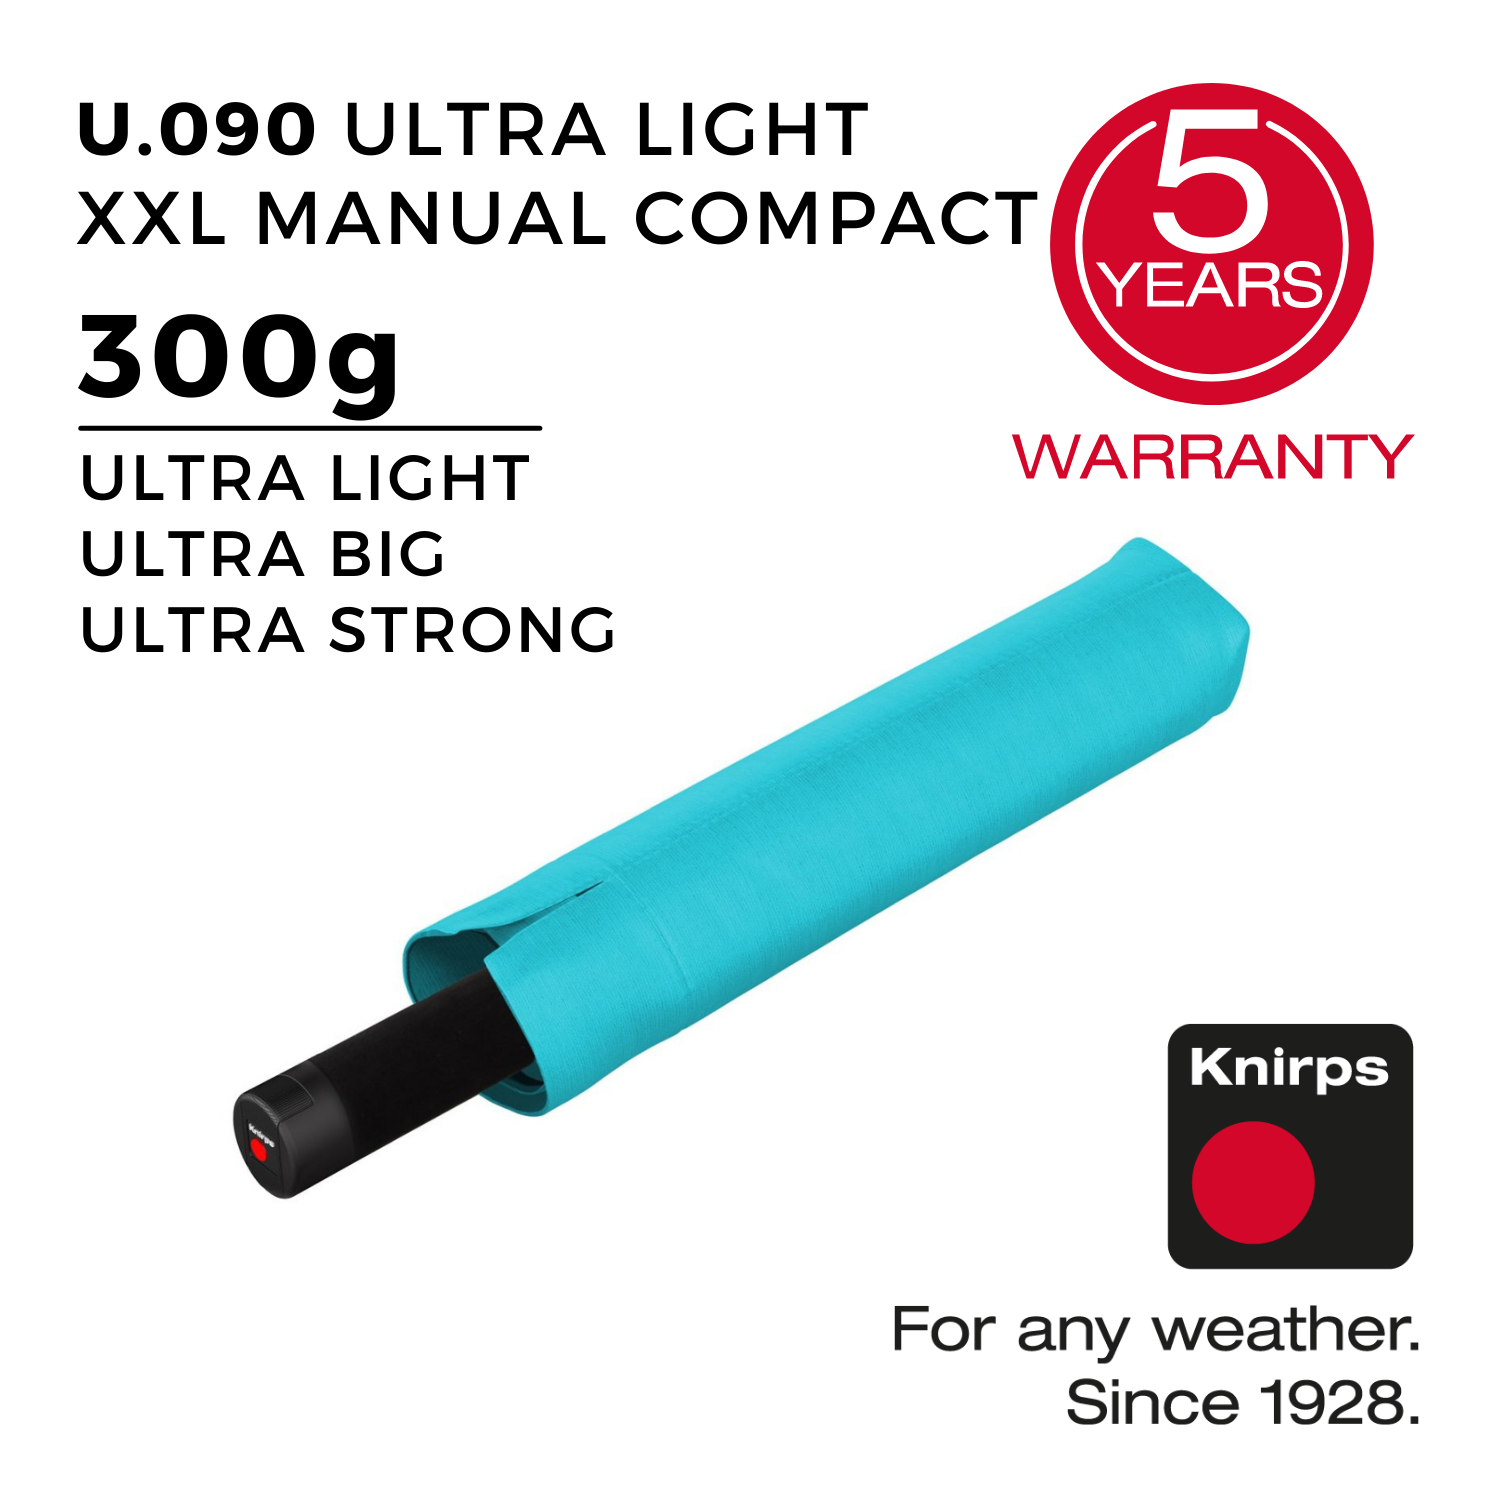 Buy Knirps U.090 Ultralight XXL Manual Compact Umbrella- Aqua in Singapore  & Malaysia - The Planet Traveller